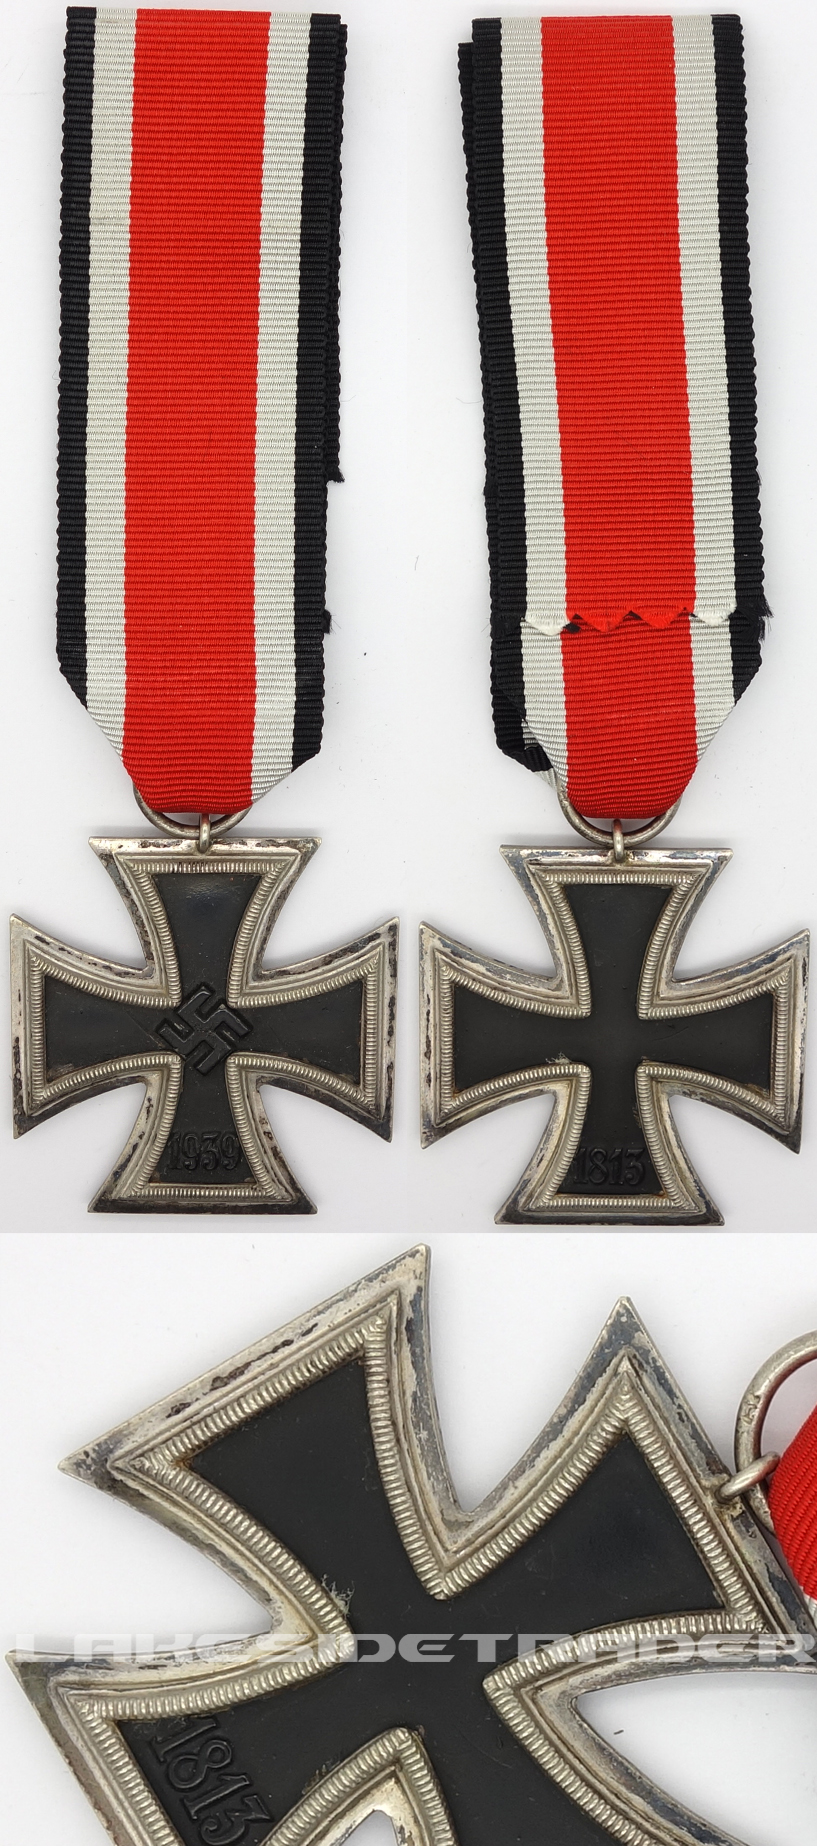 2nd Class Iron Cross by 132